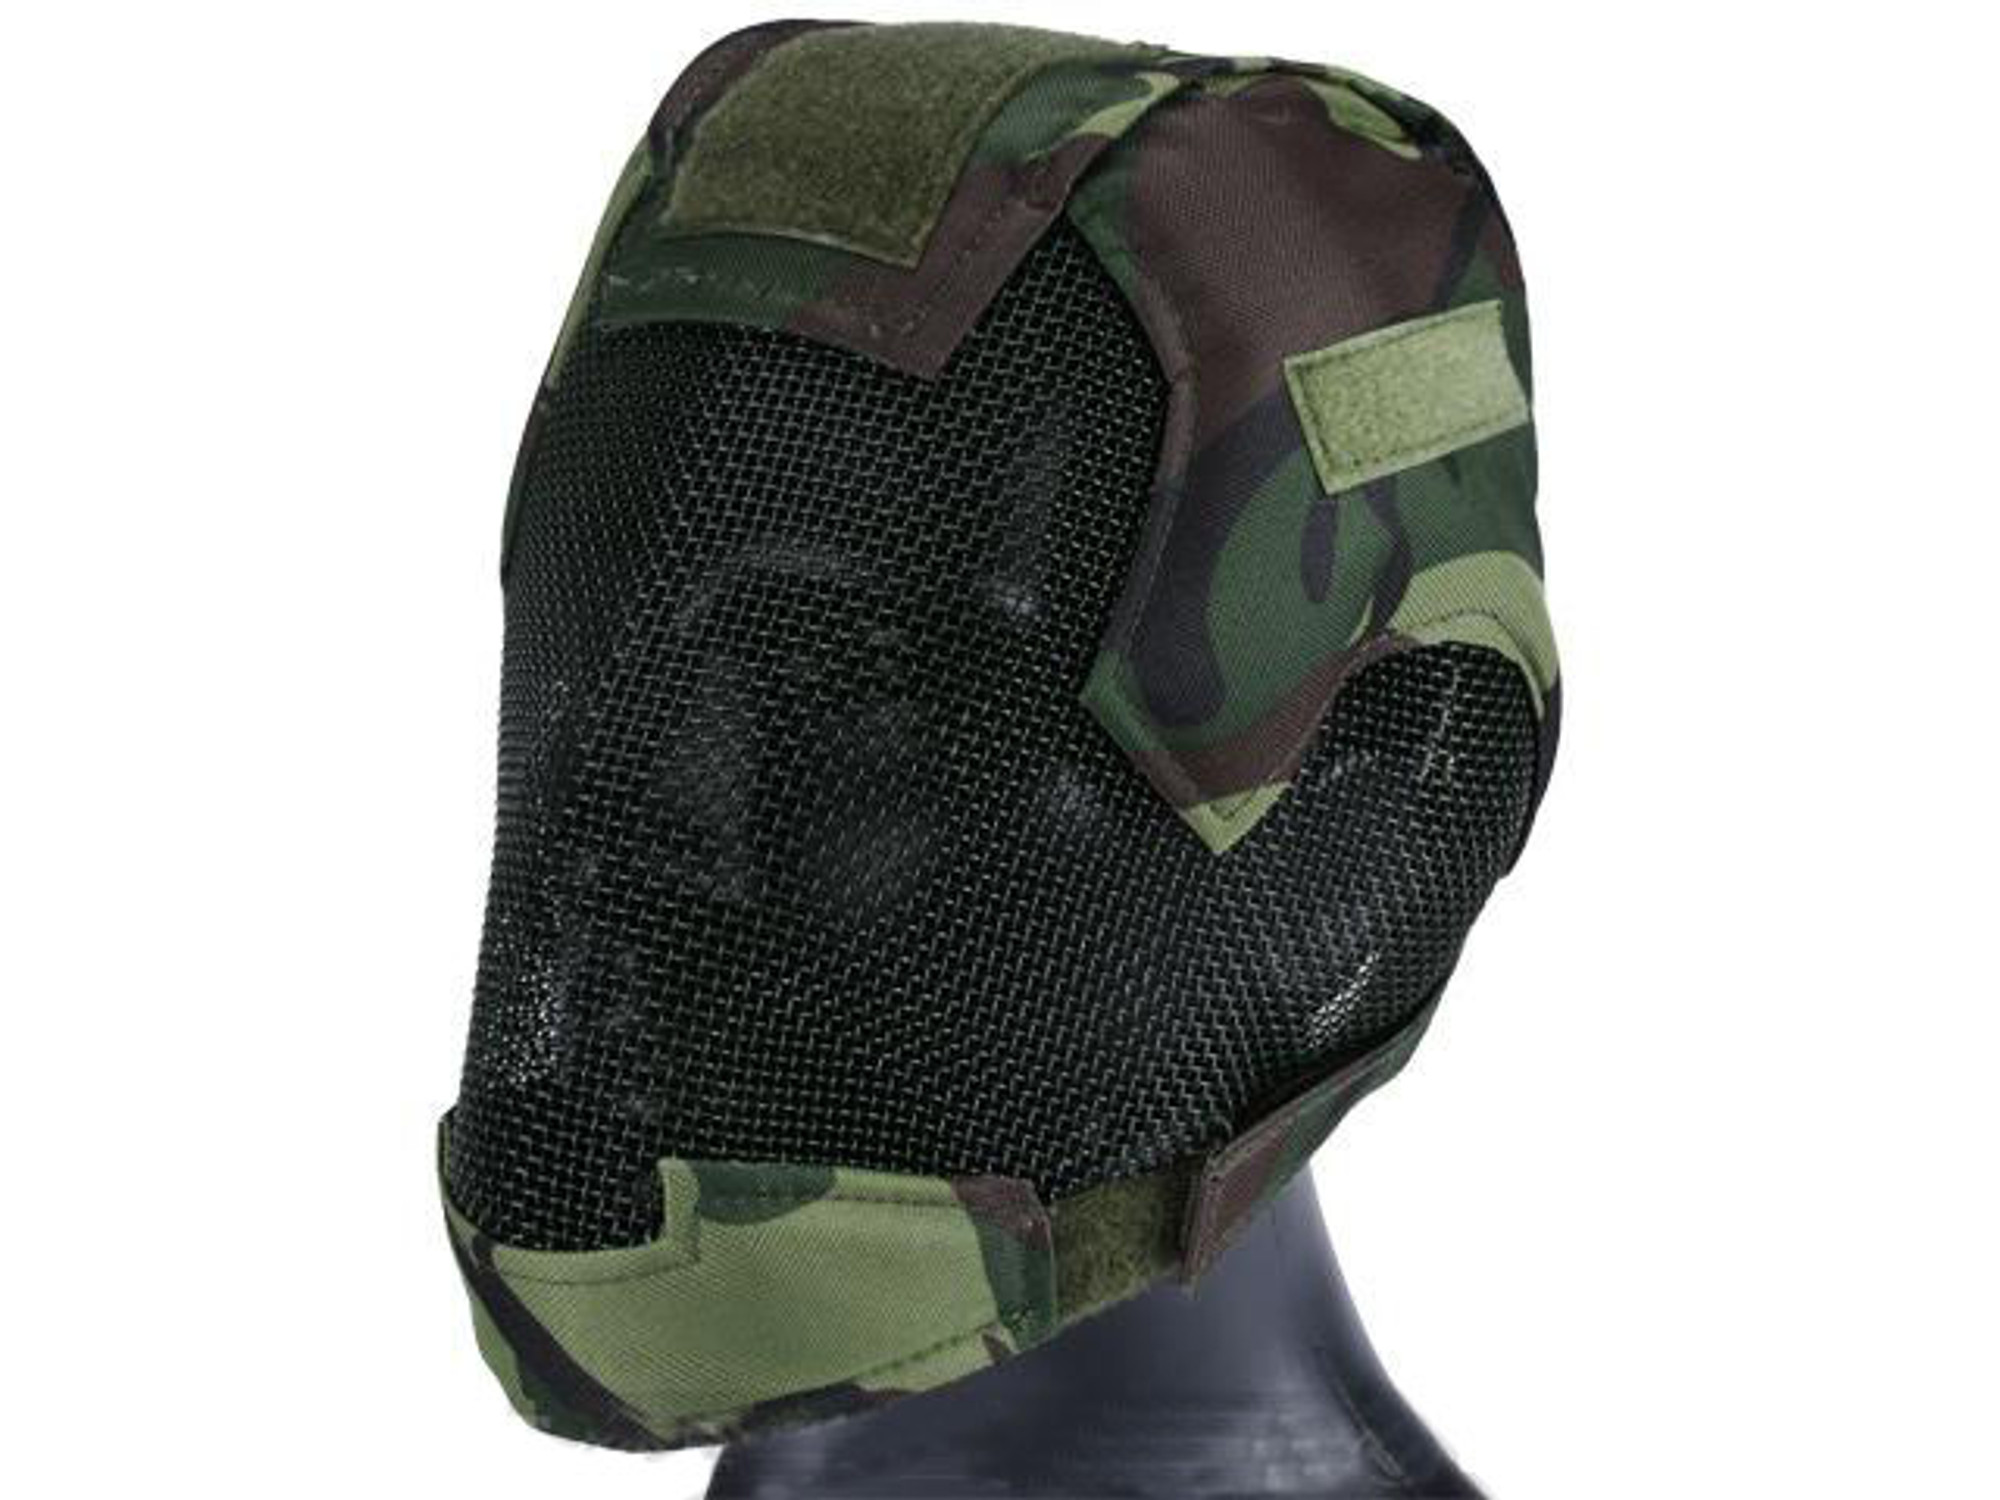 Matrix "Striker Helmet" Full Face Carbon Steel Mesh Mask / Helmet (Color: Woodland Camo)